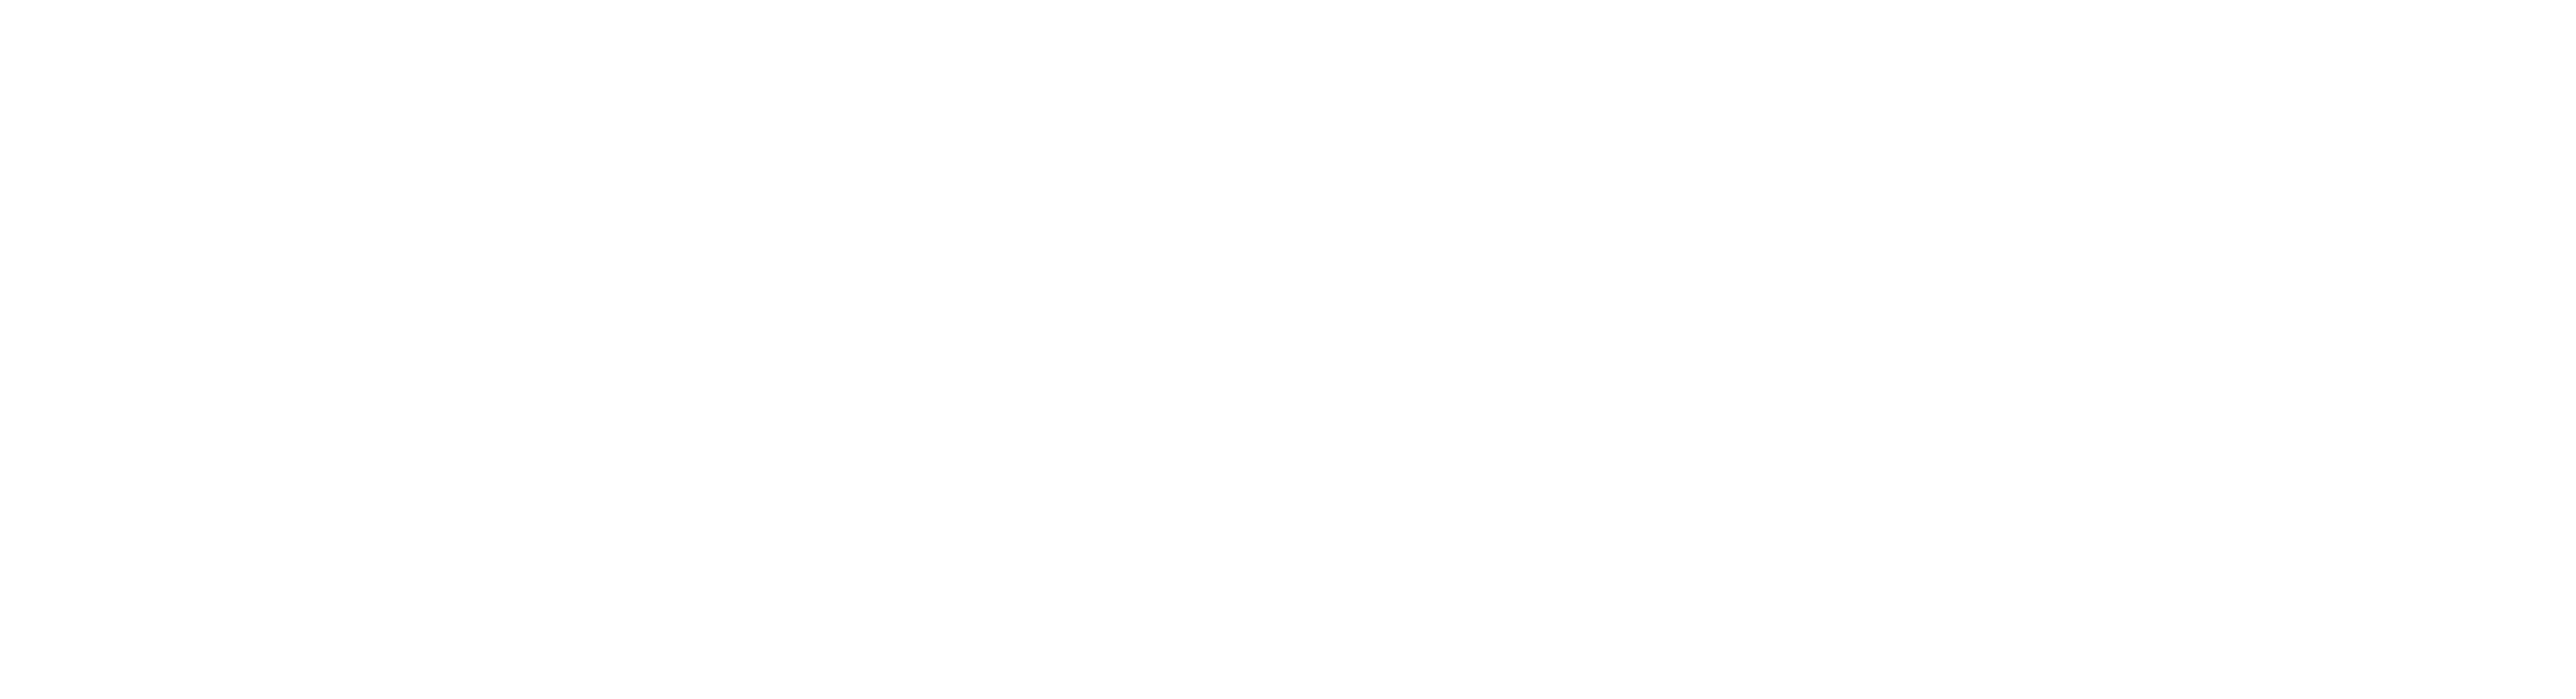 Blue Crane Consulting Group Logo